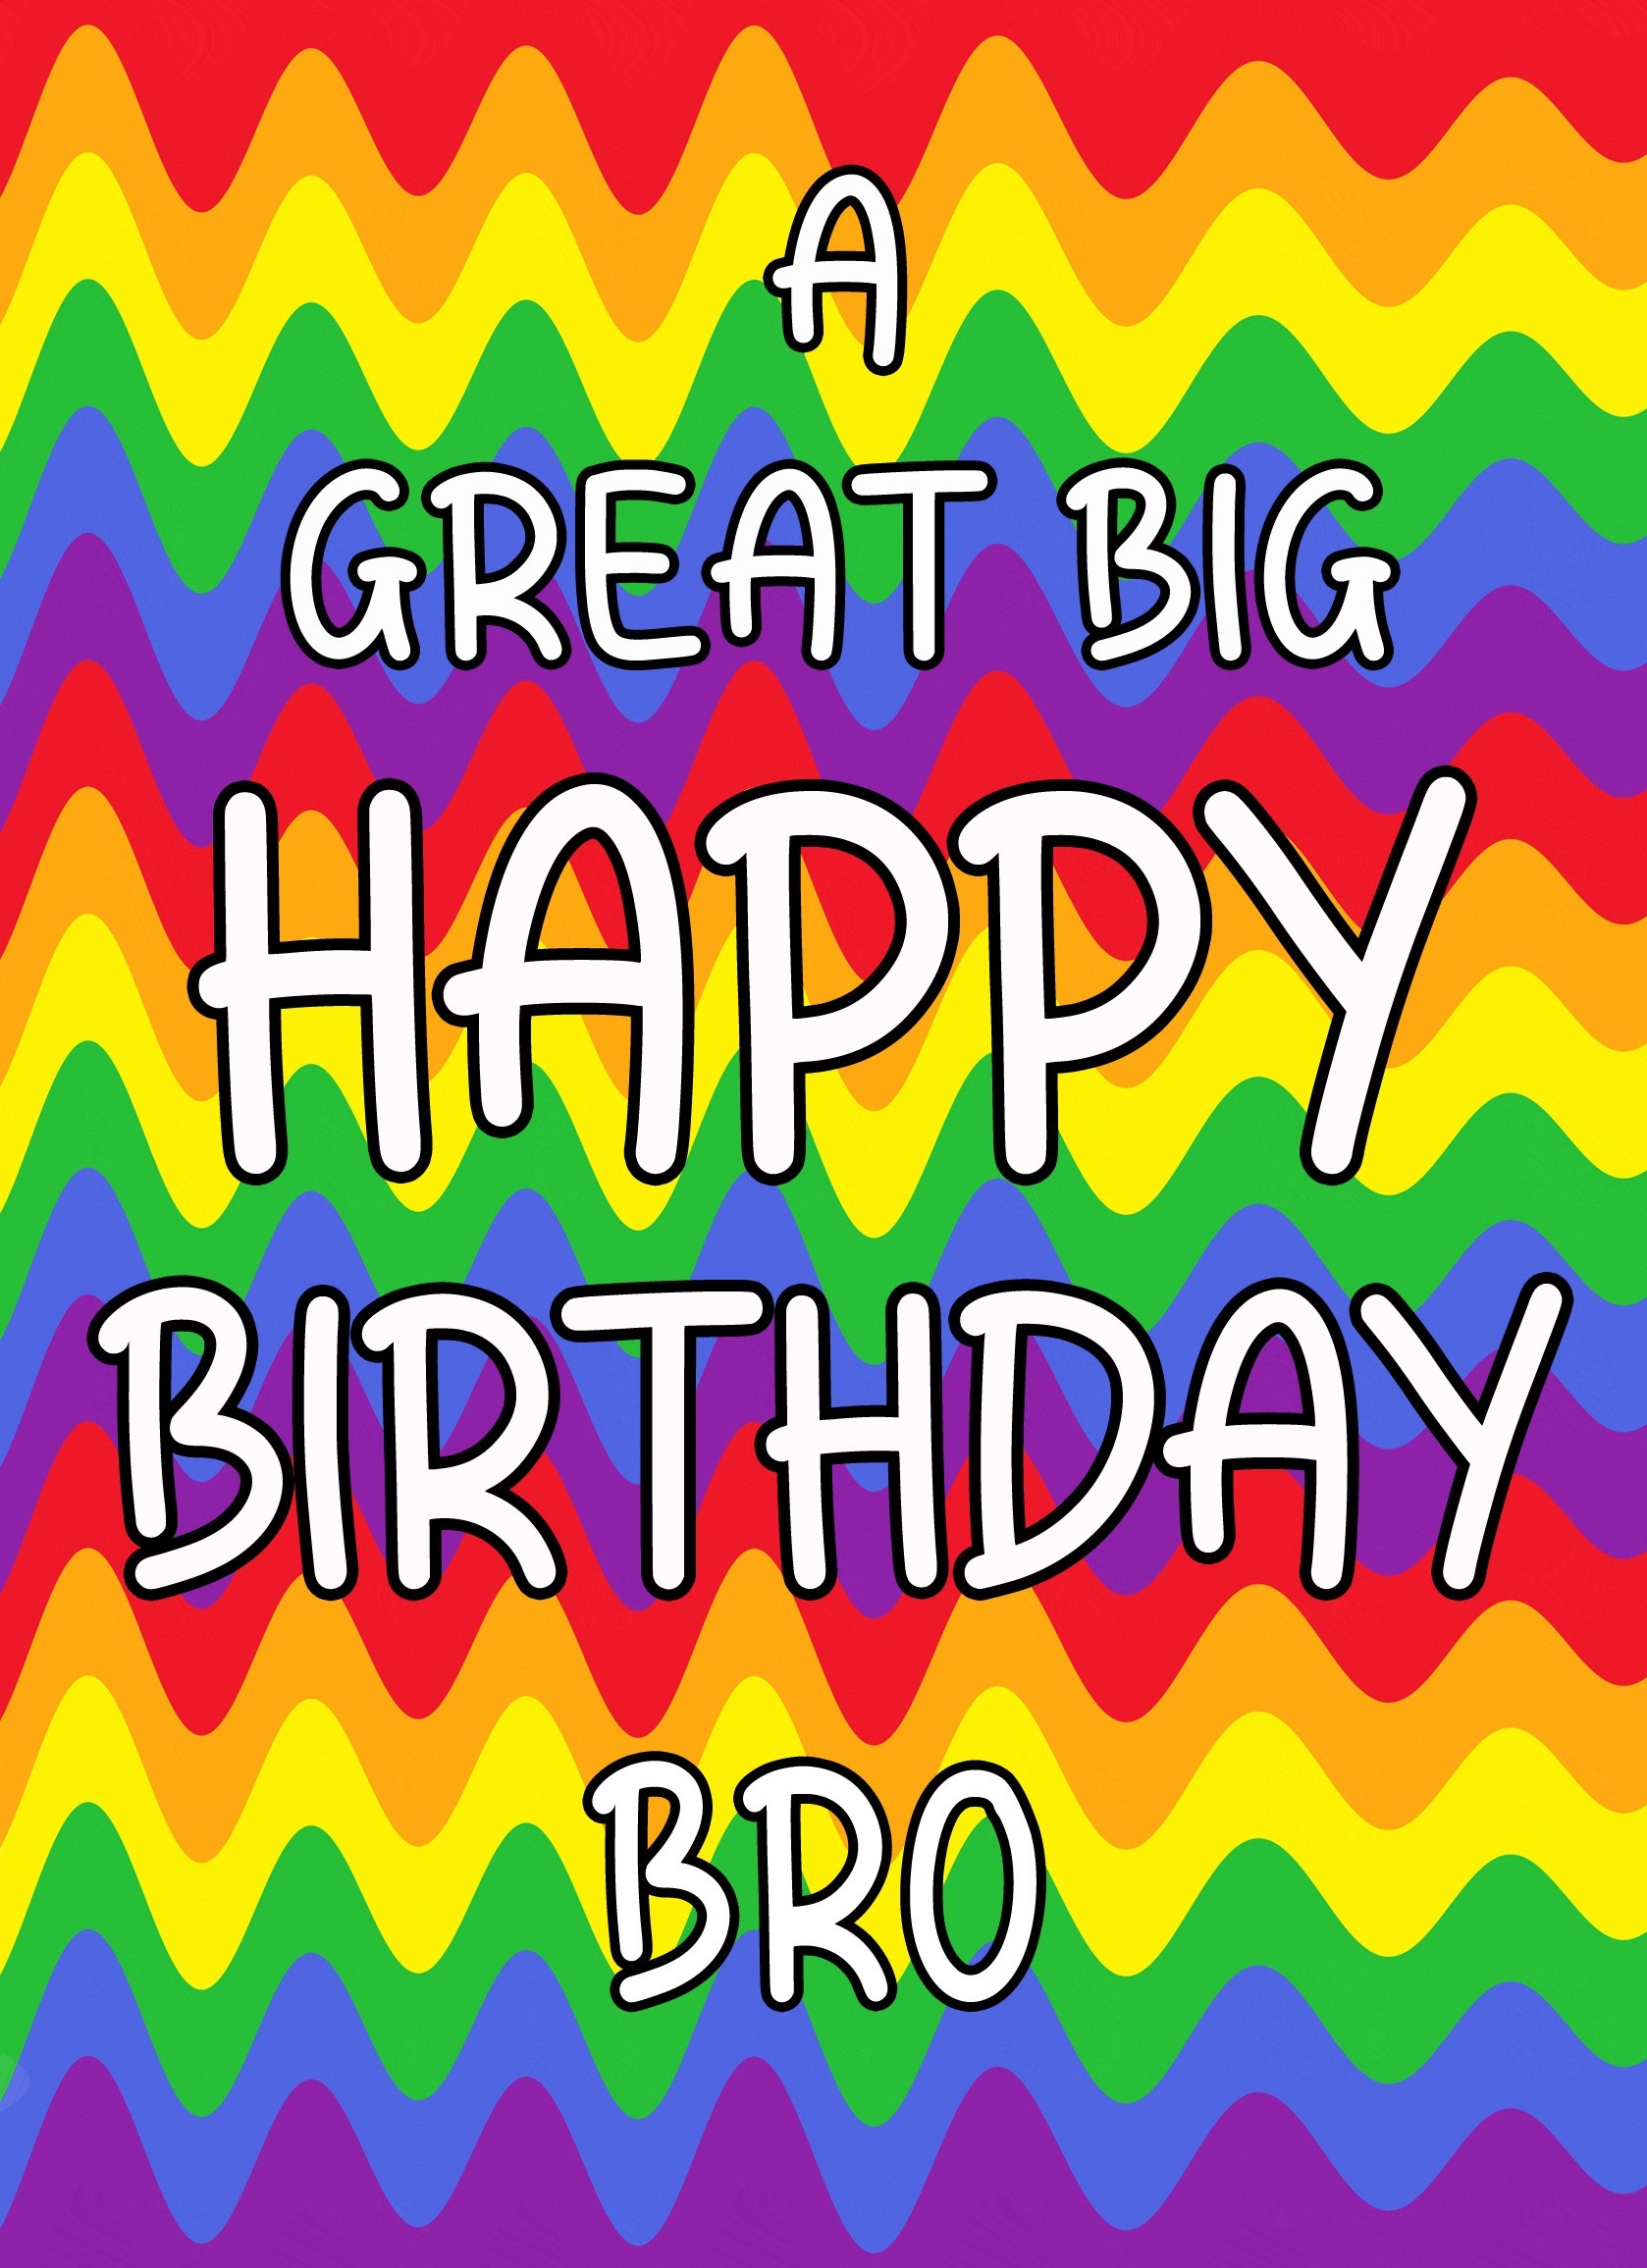 Happy Birthday 'Bro' Greeting Card (Rainbow)